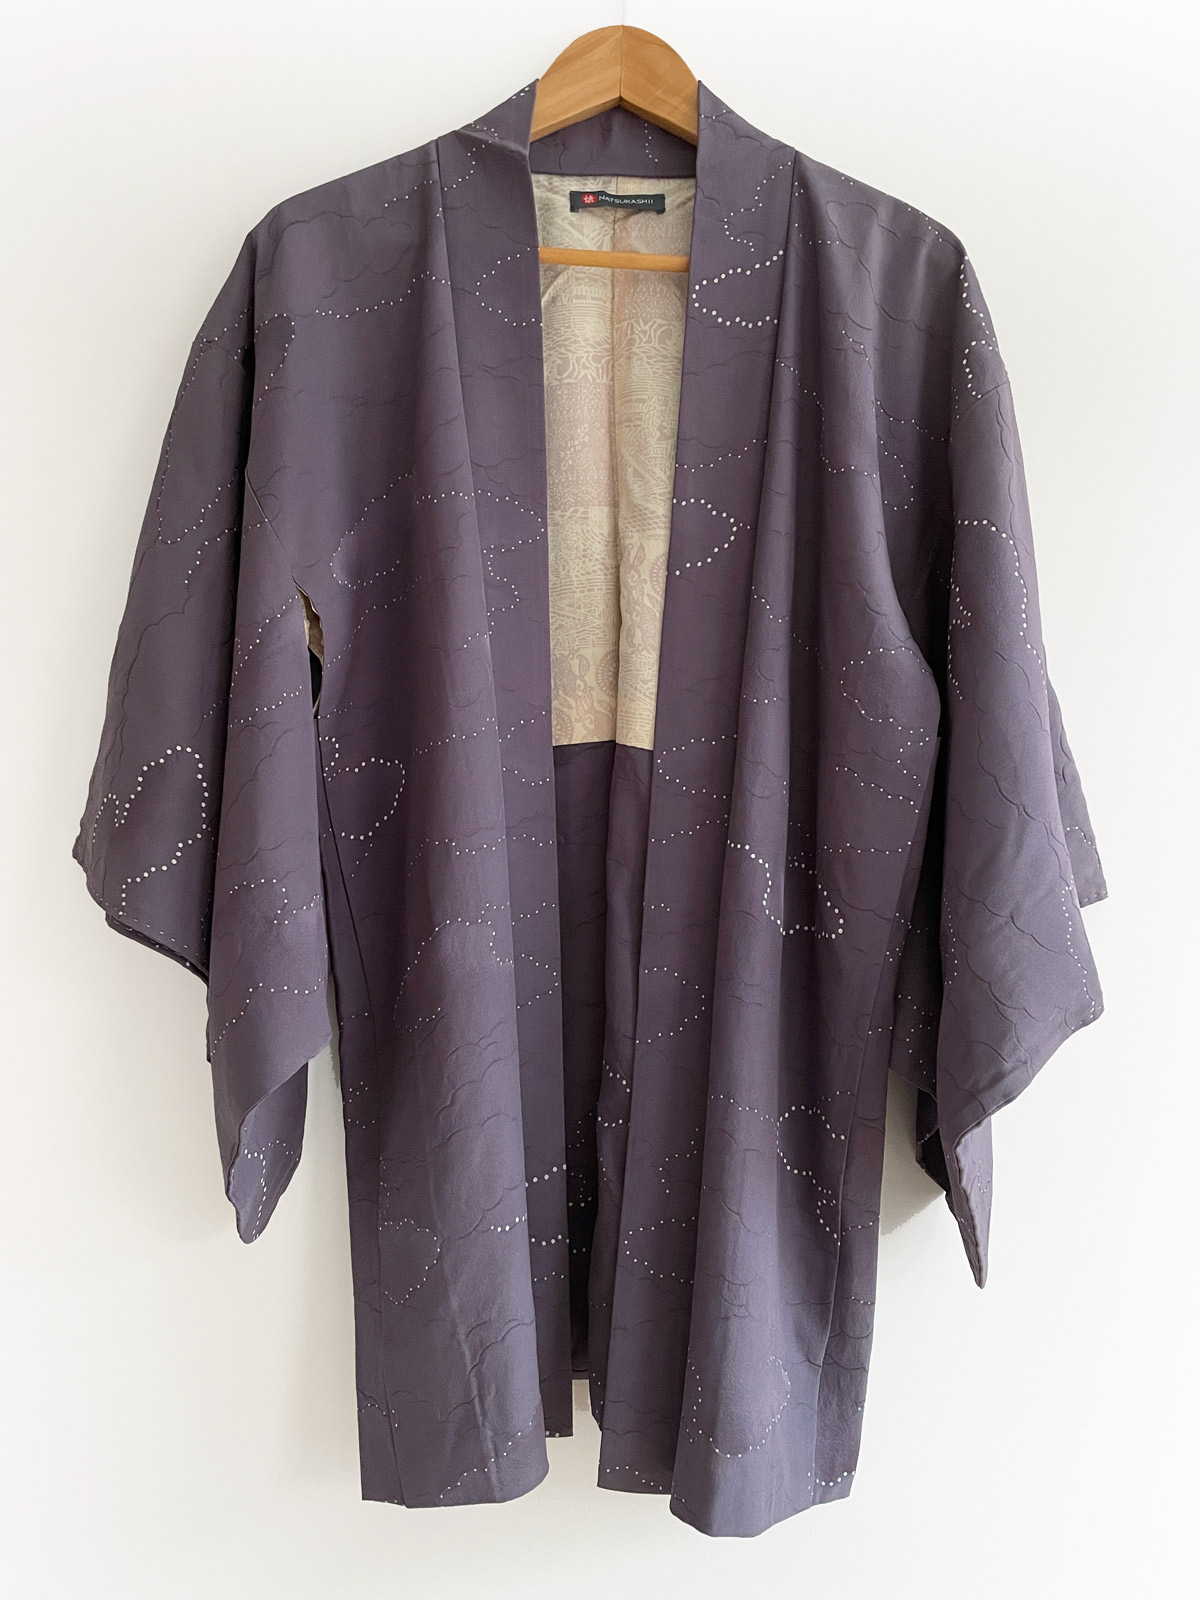 Chisato – Stylish Kimono jacket in lavender-gray color